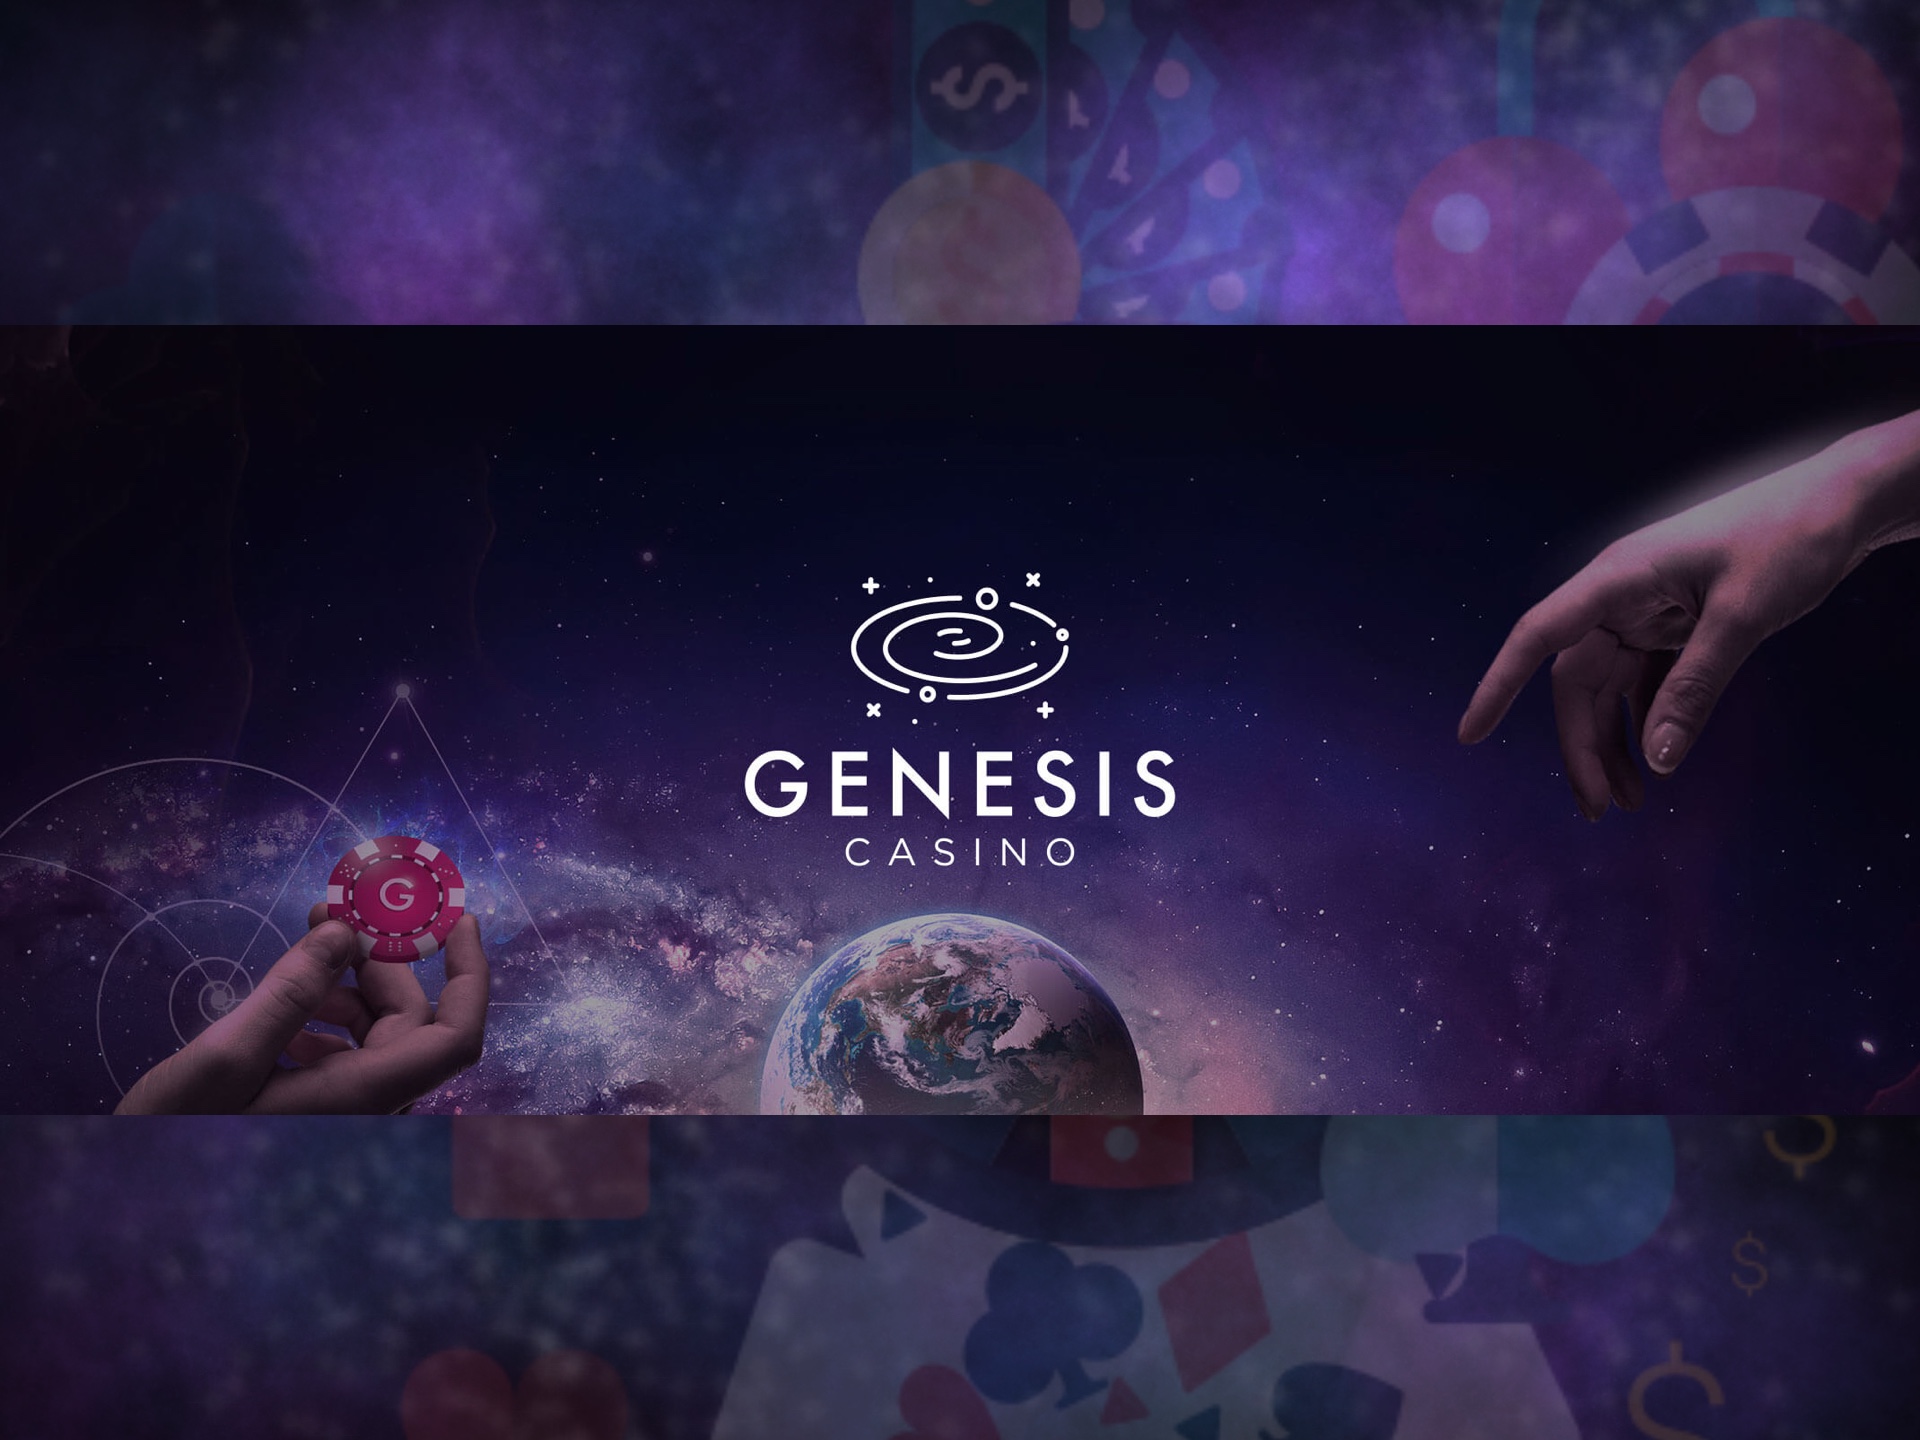 Play casino games on money at Genesis Online Casino.